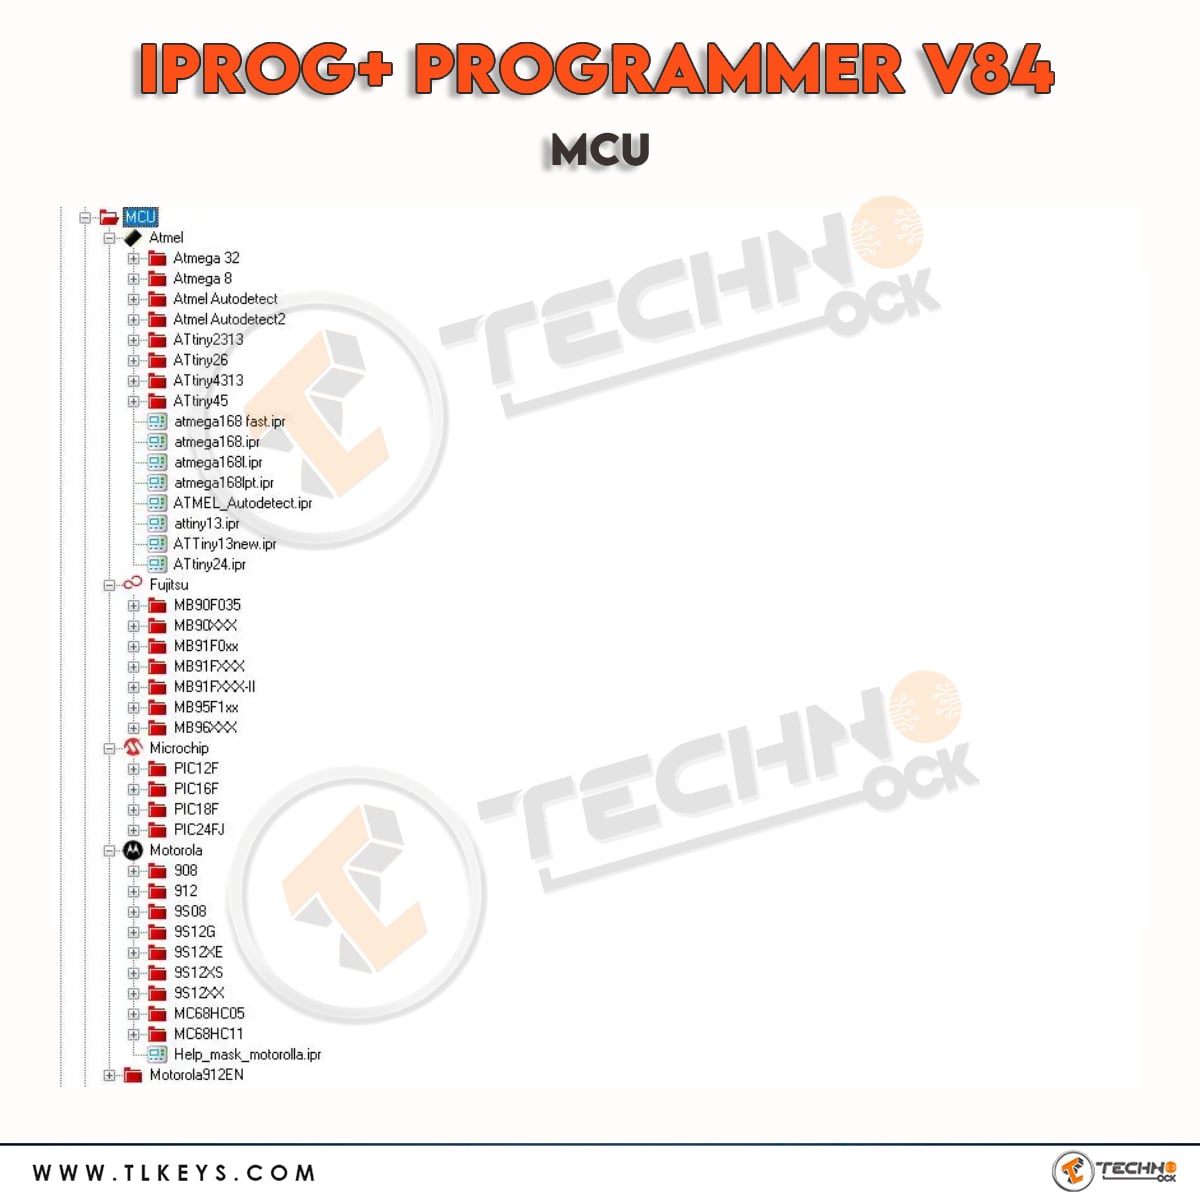 IPROG+ MCU programmer